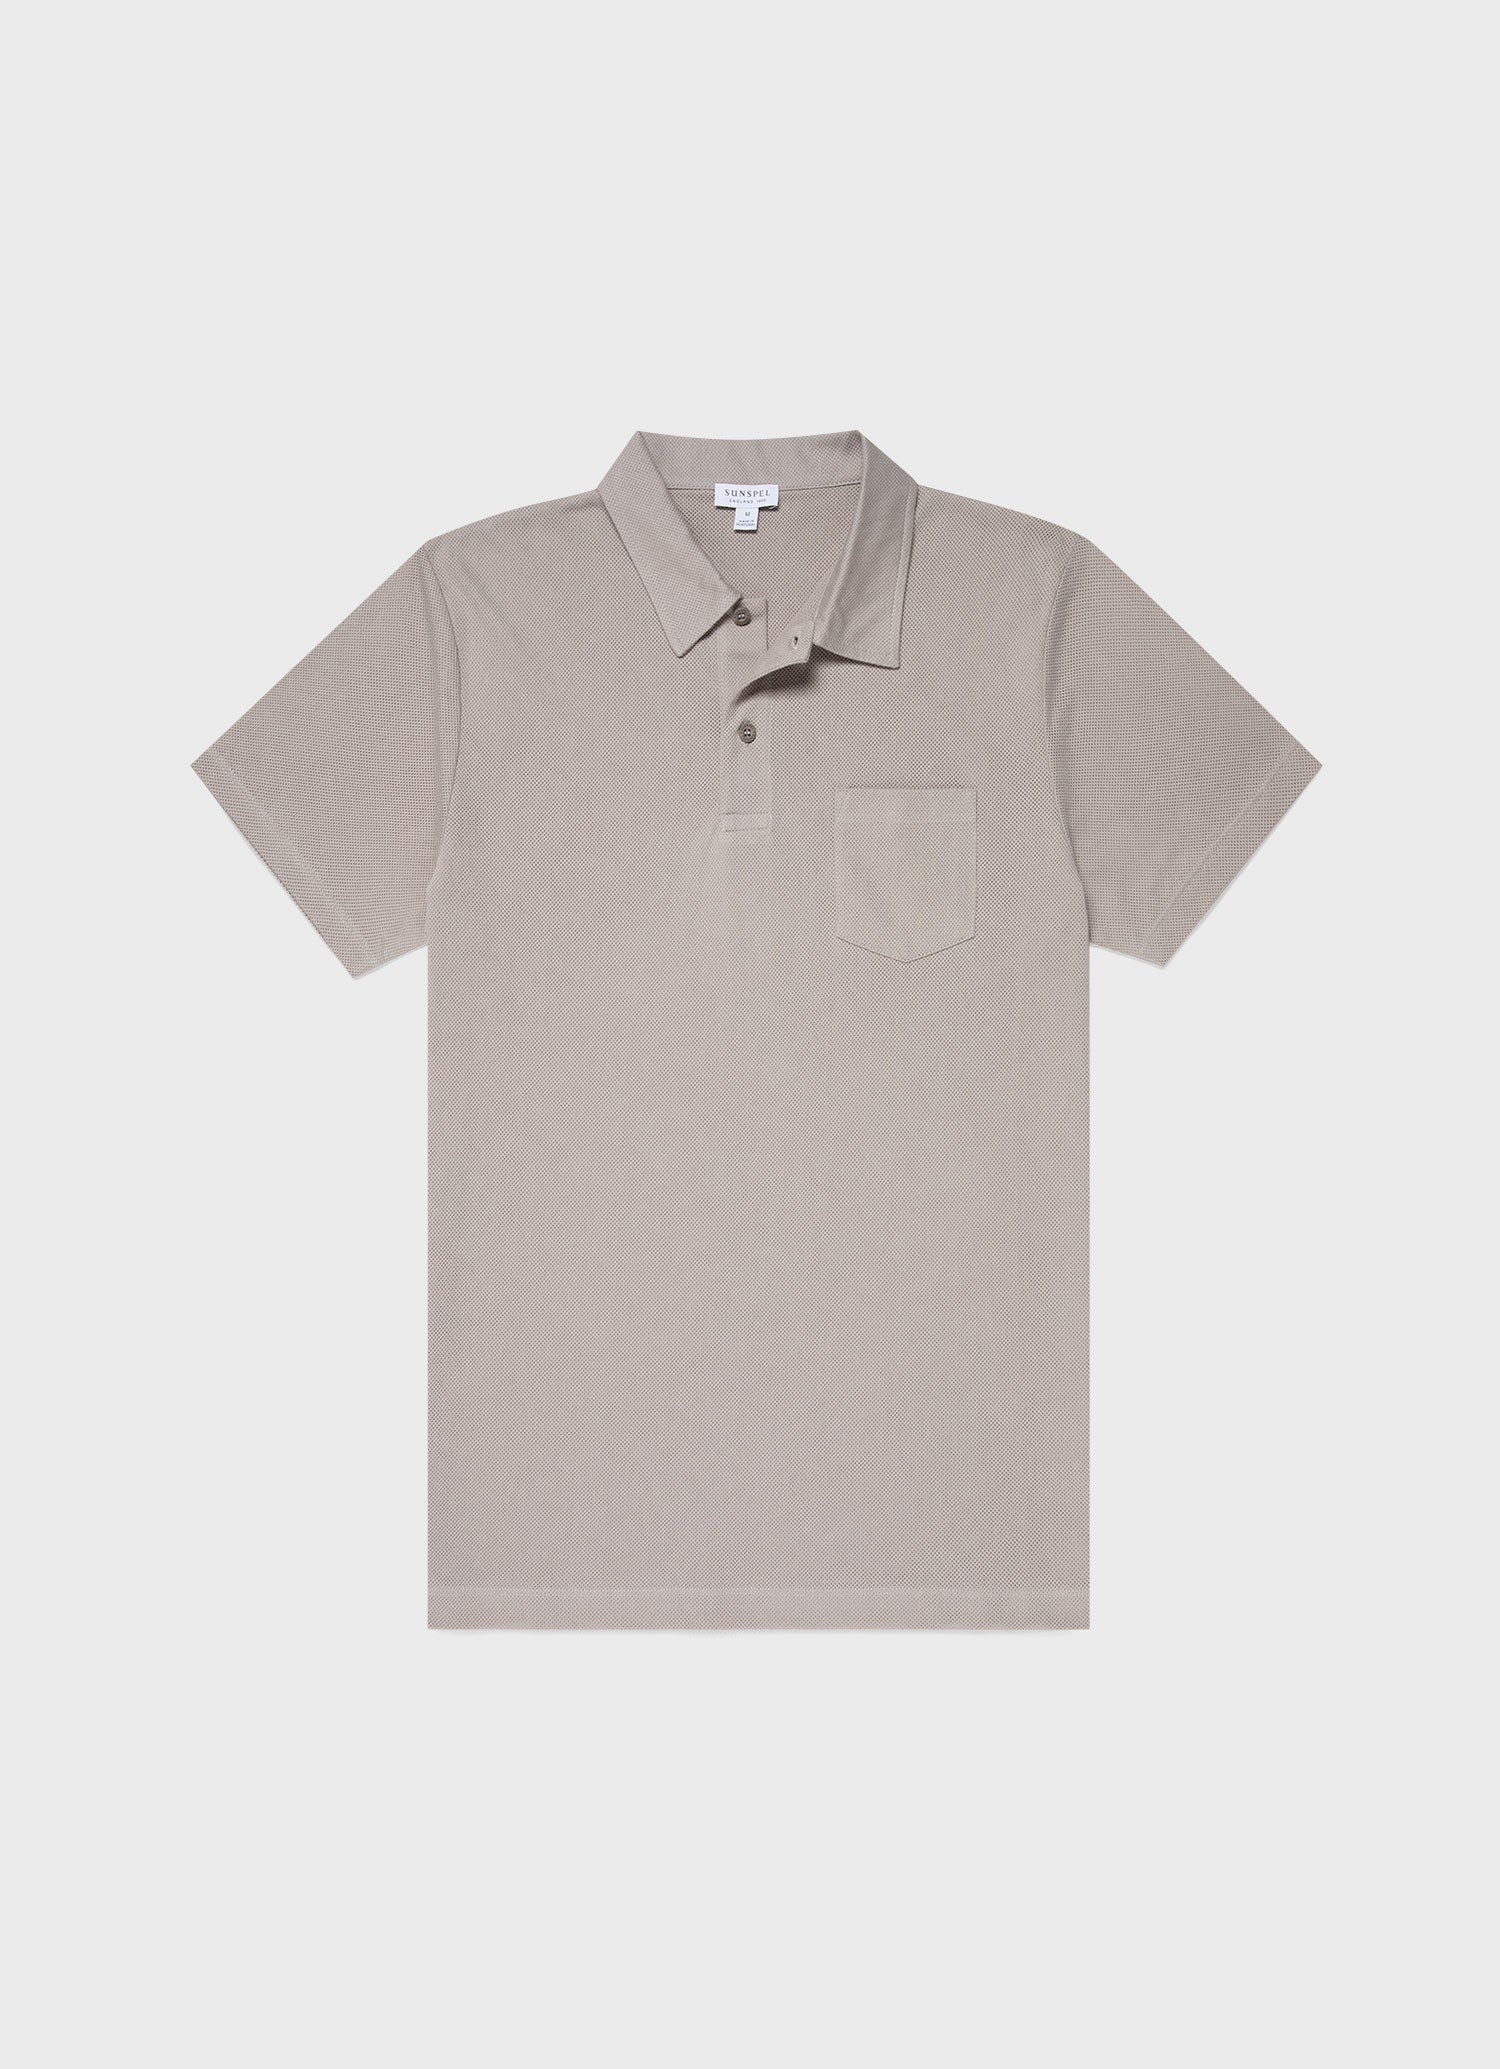 Men's Riviera Polo Shirt in Mid Grey | Sunspel